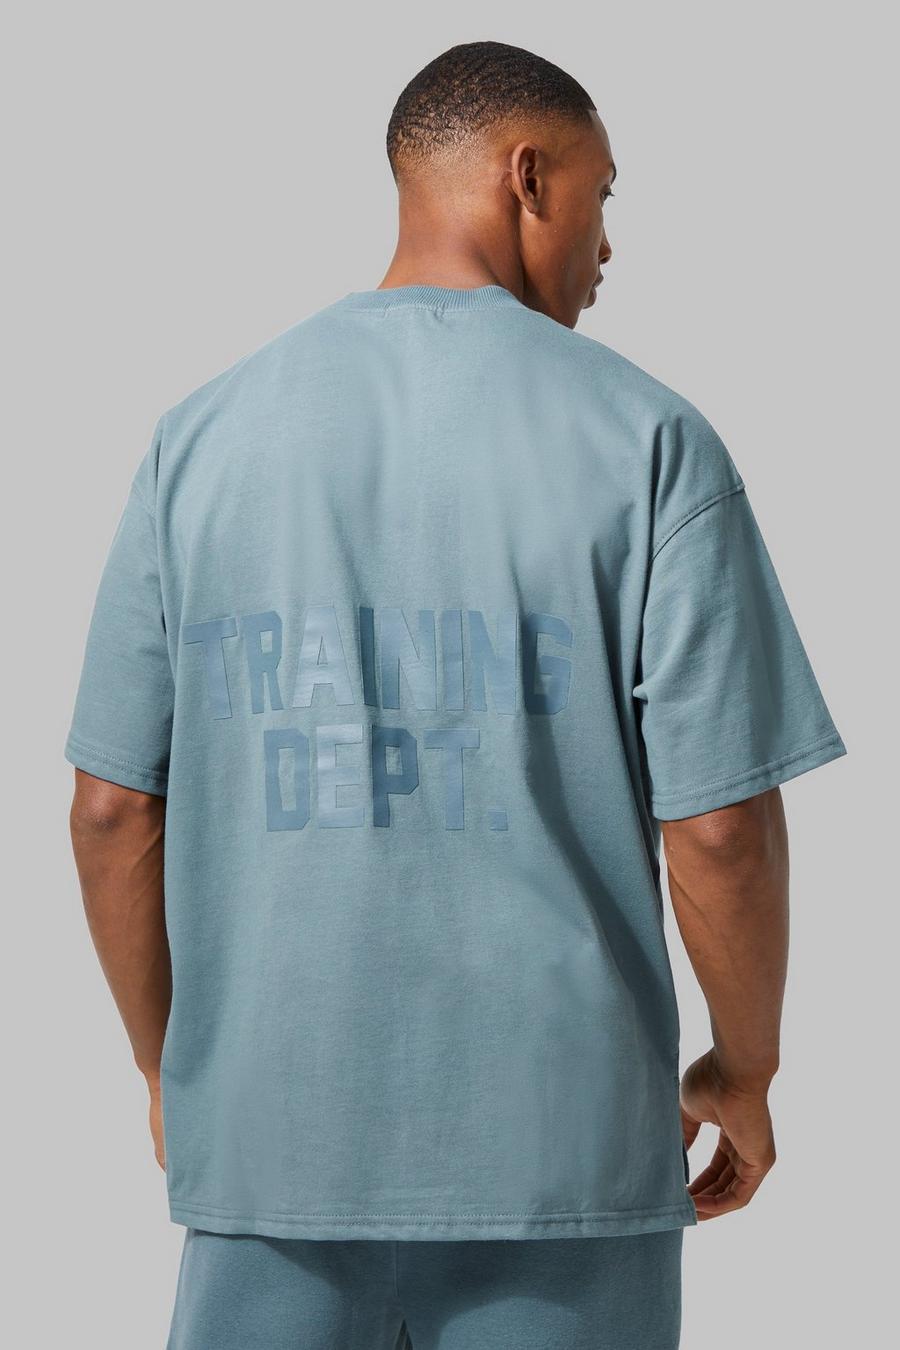 Camiseta Active oversize con estampado Training Dept, Slate blue